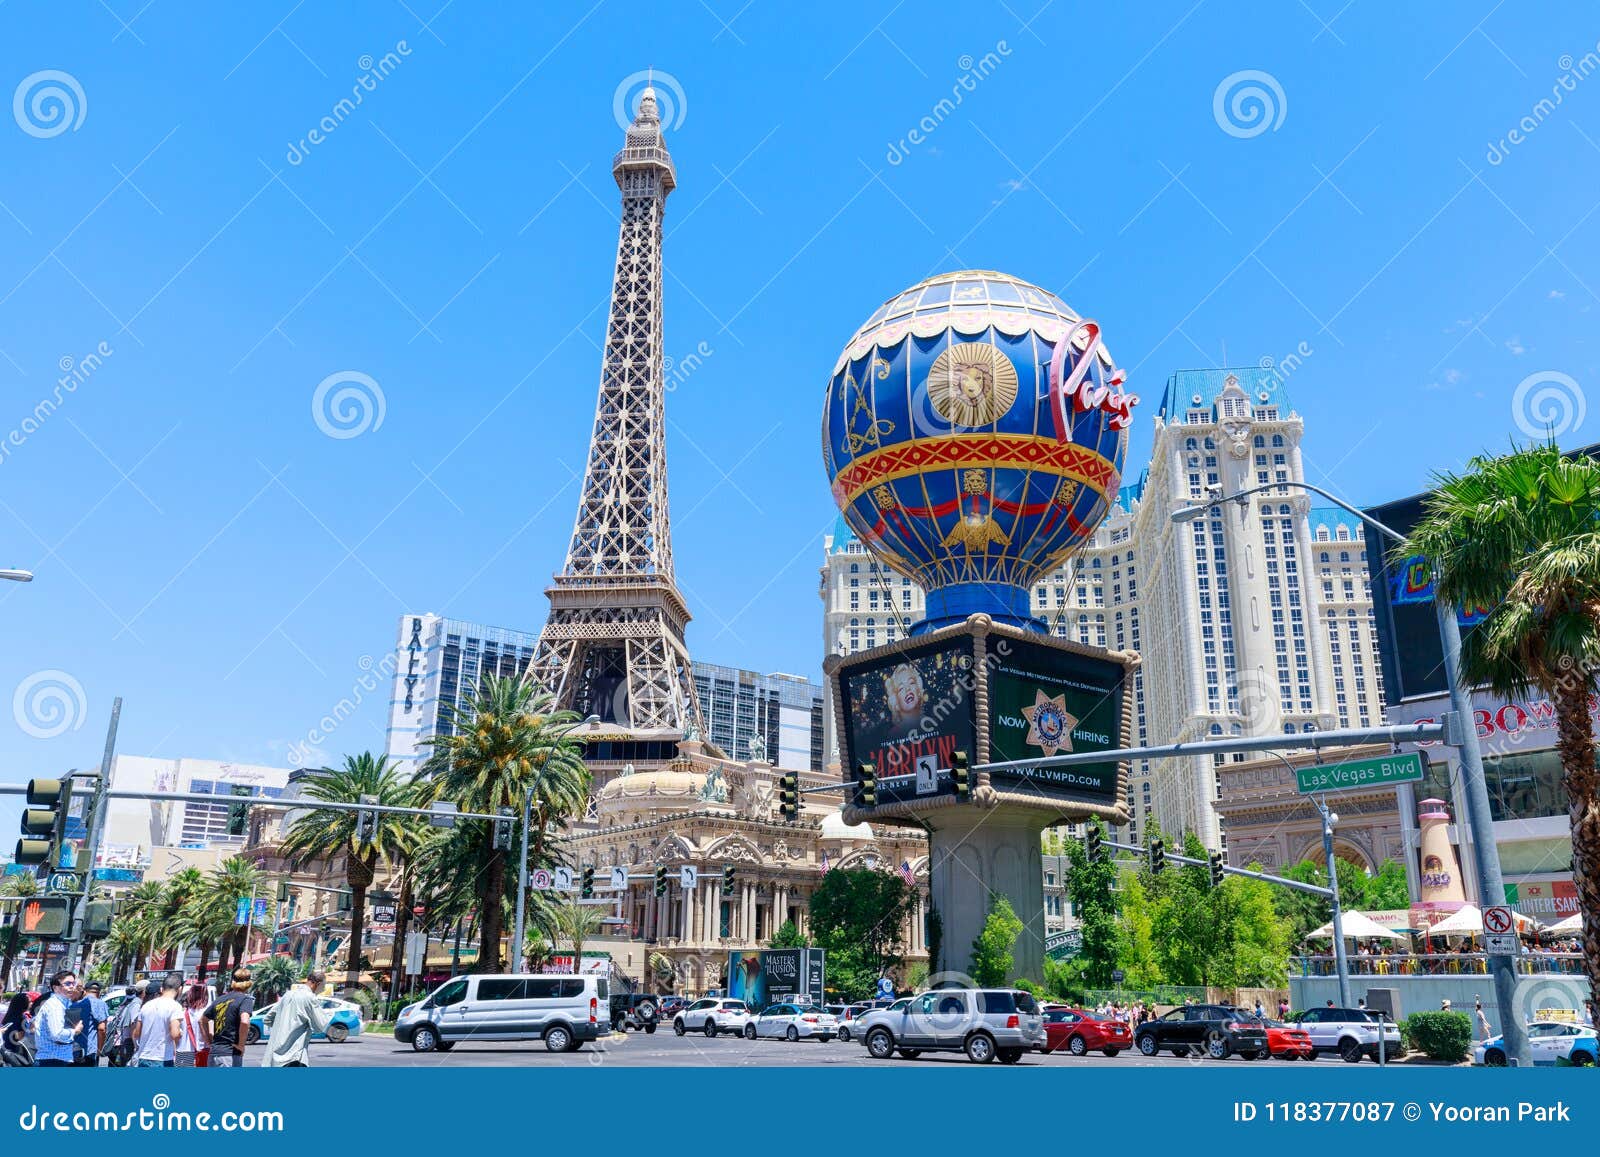 Paris Las Vegas, Which is a Luxury Resort and Casino on Las Vegas